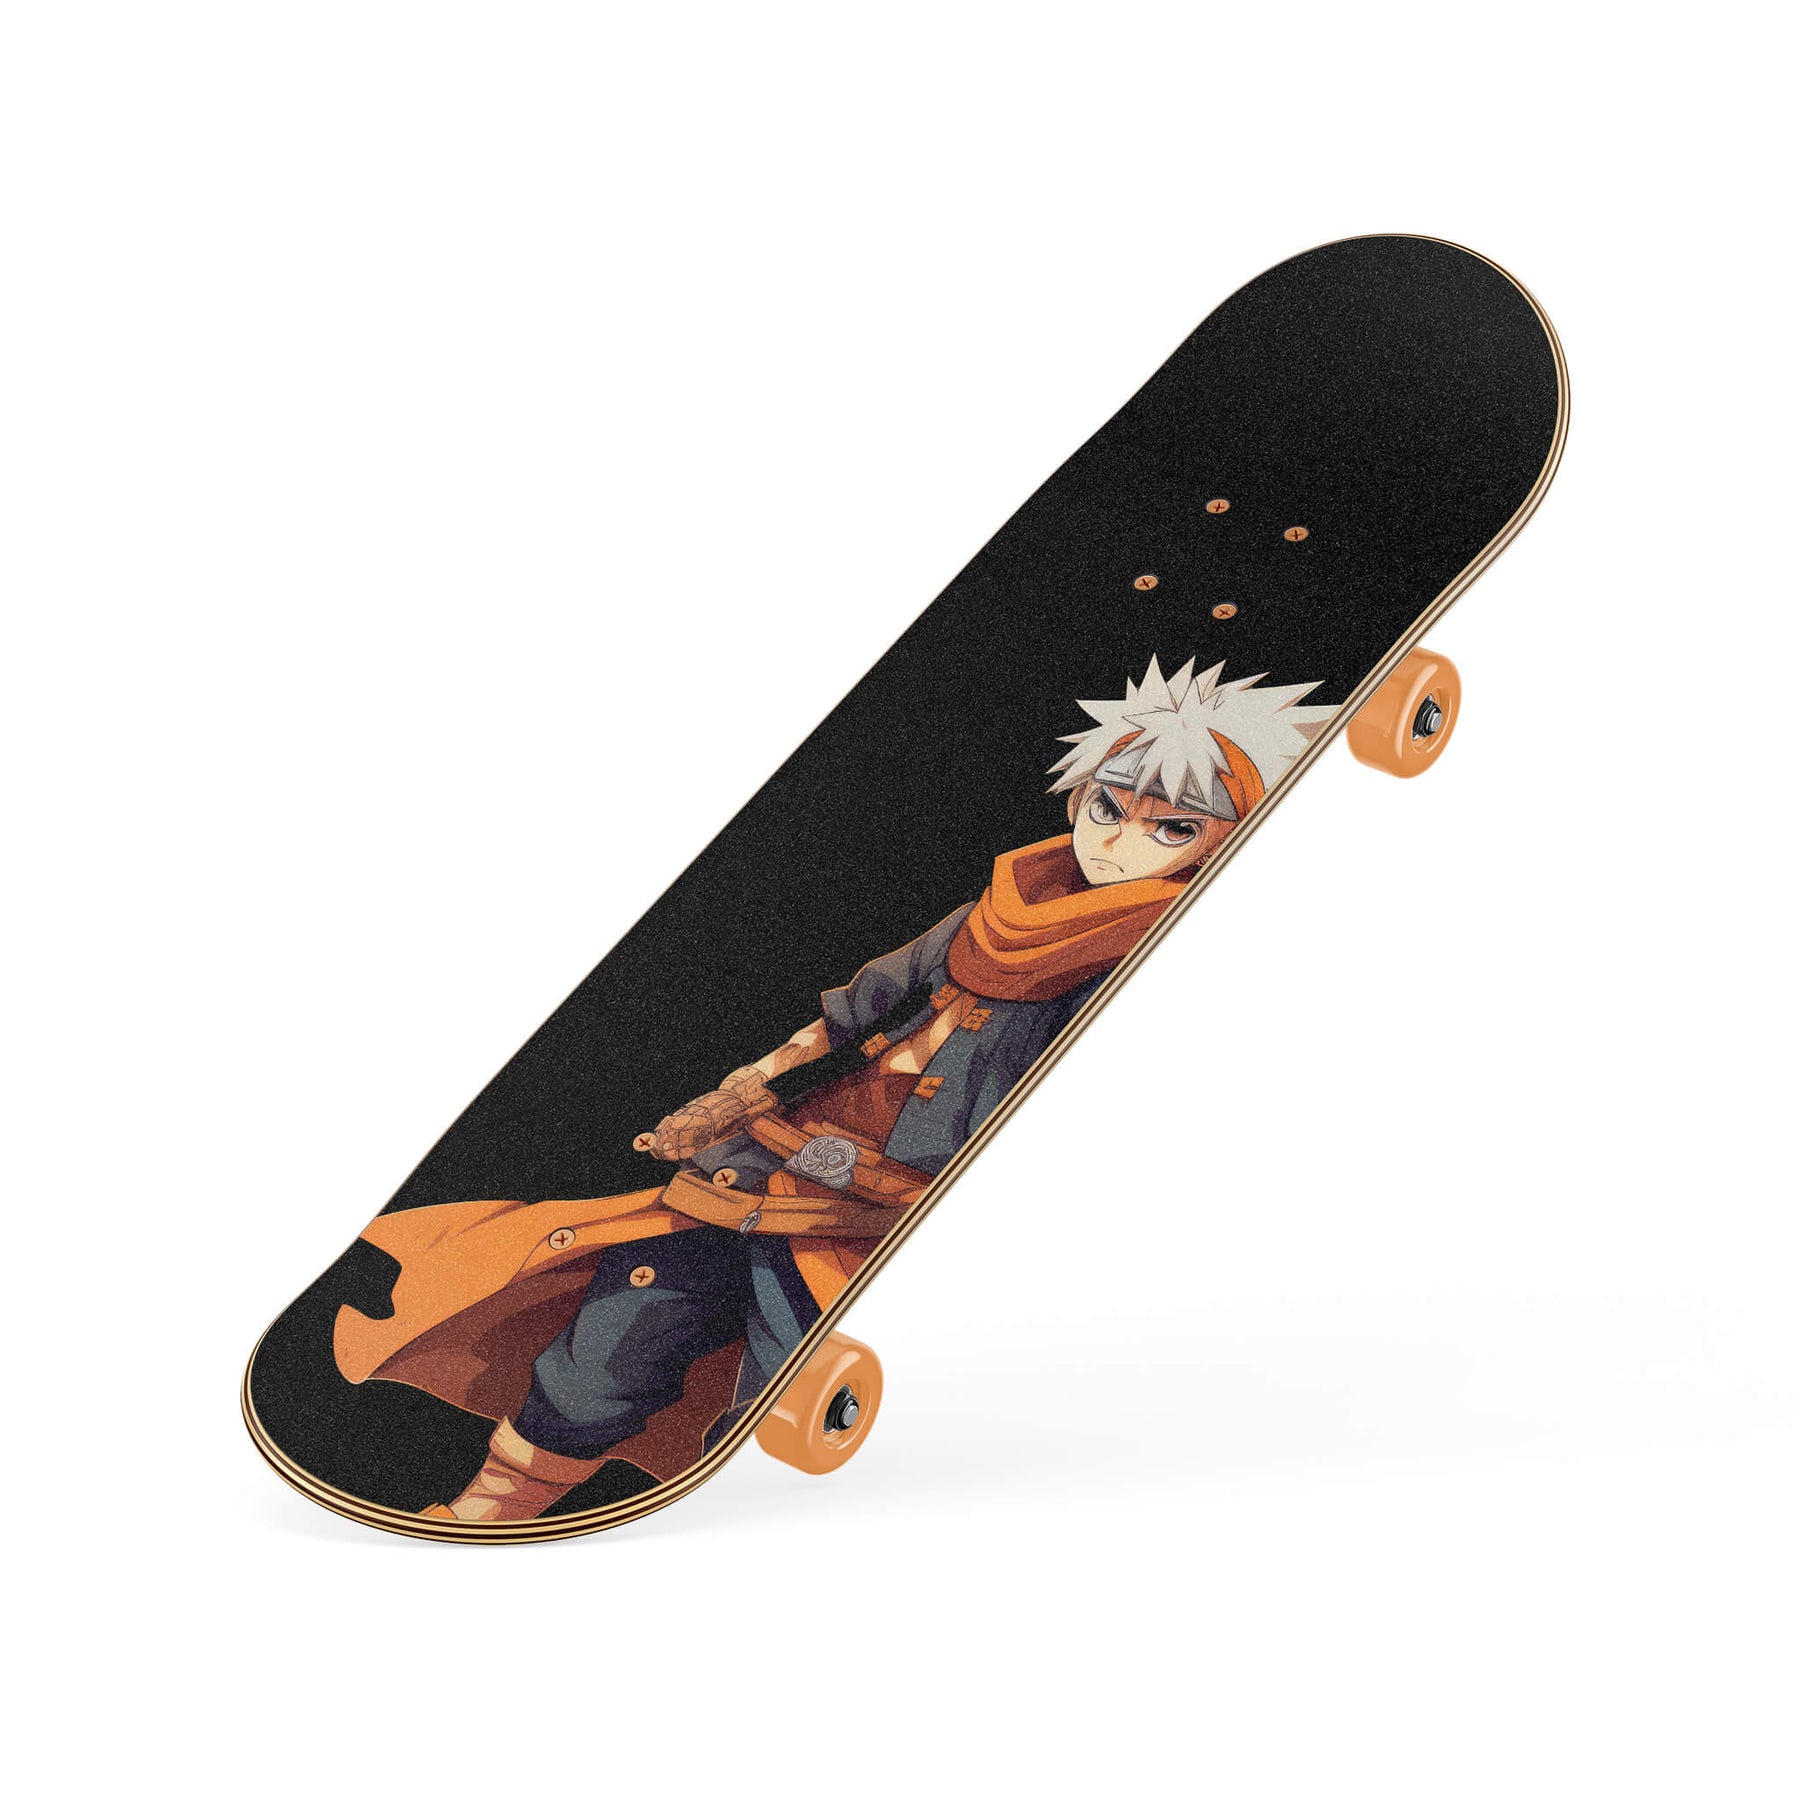 Sukuna JJK Anime Skateboard Deck  dubizzle